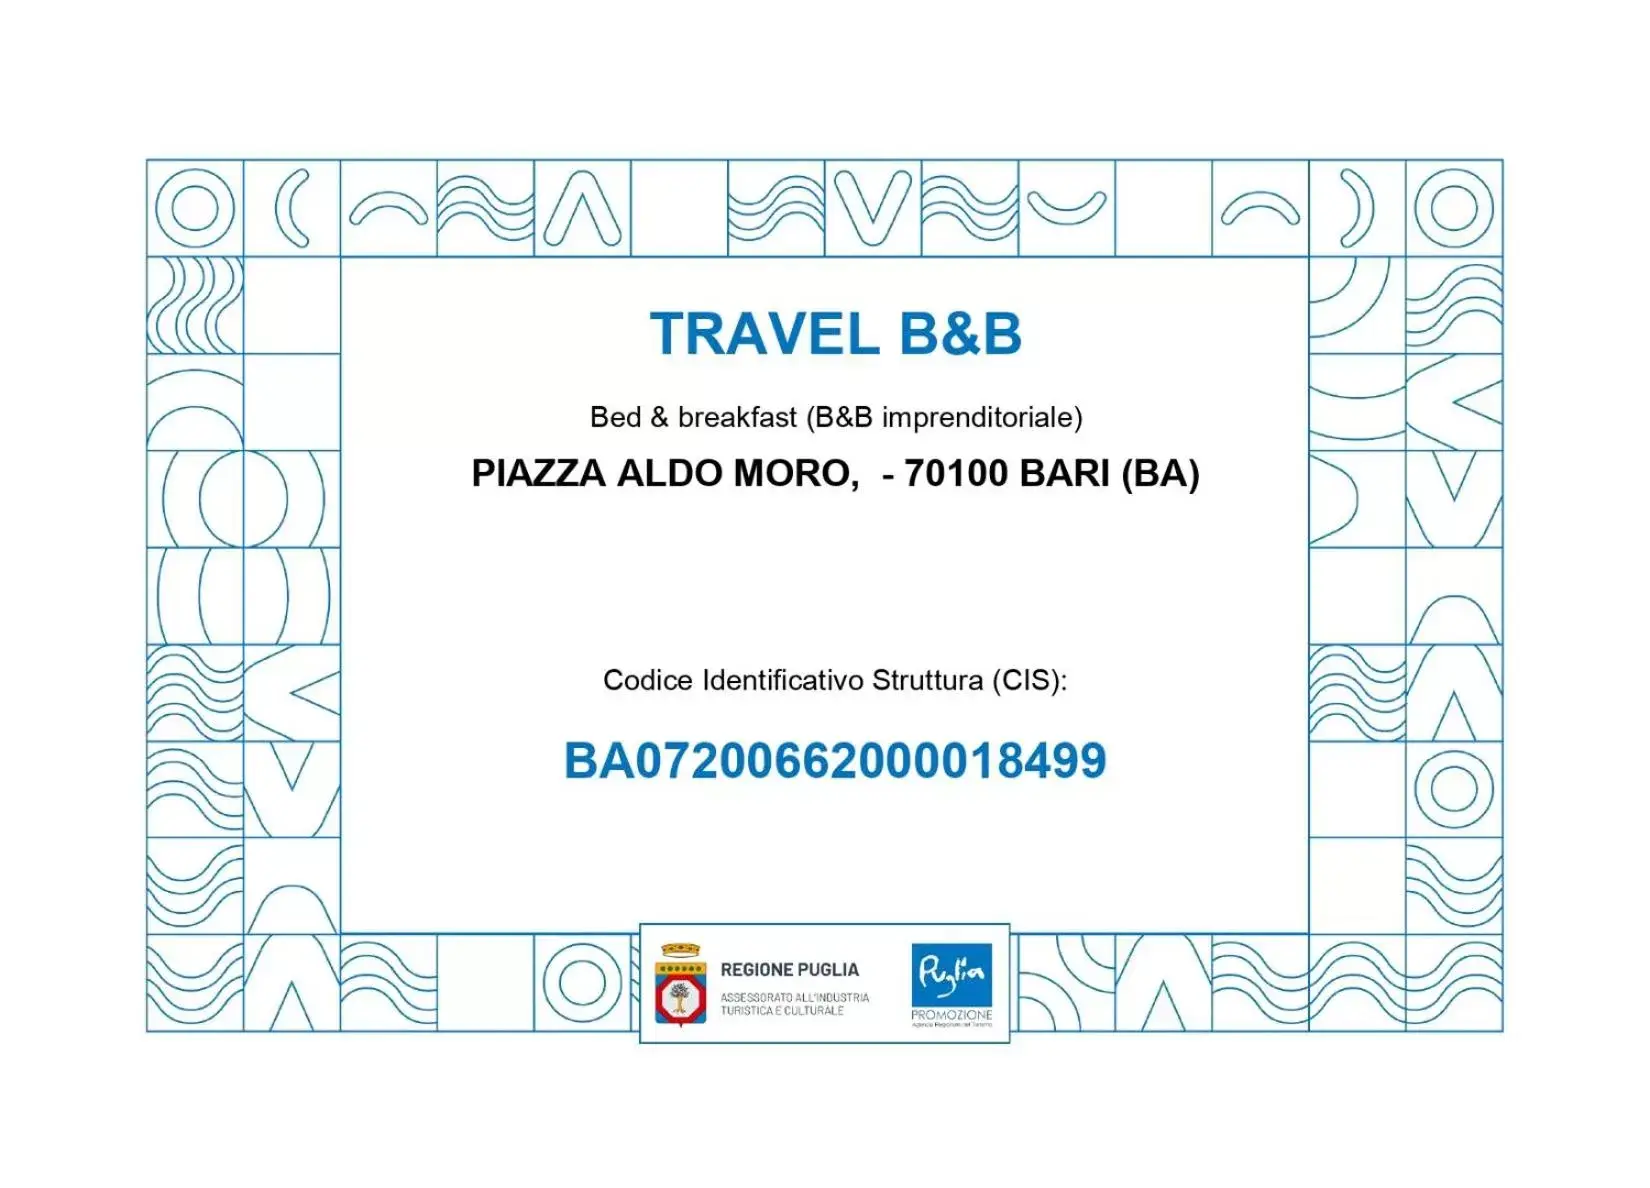 Logo/Certificate/Sign, Floor Plan in Travel B&B